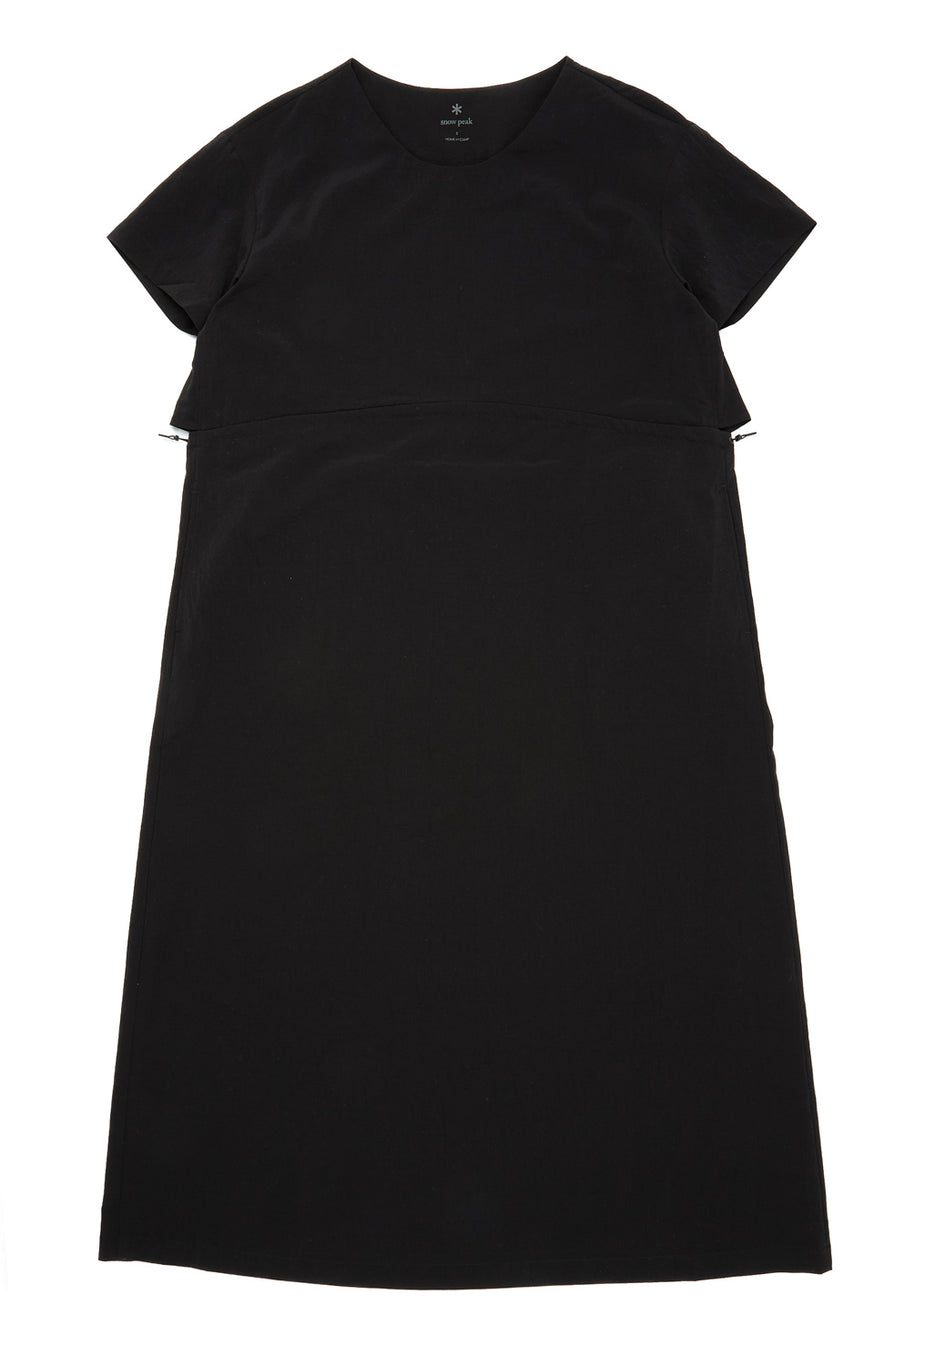 Snow Peak Women's Breathable Quick Dry Dress - Black